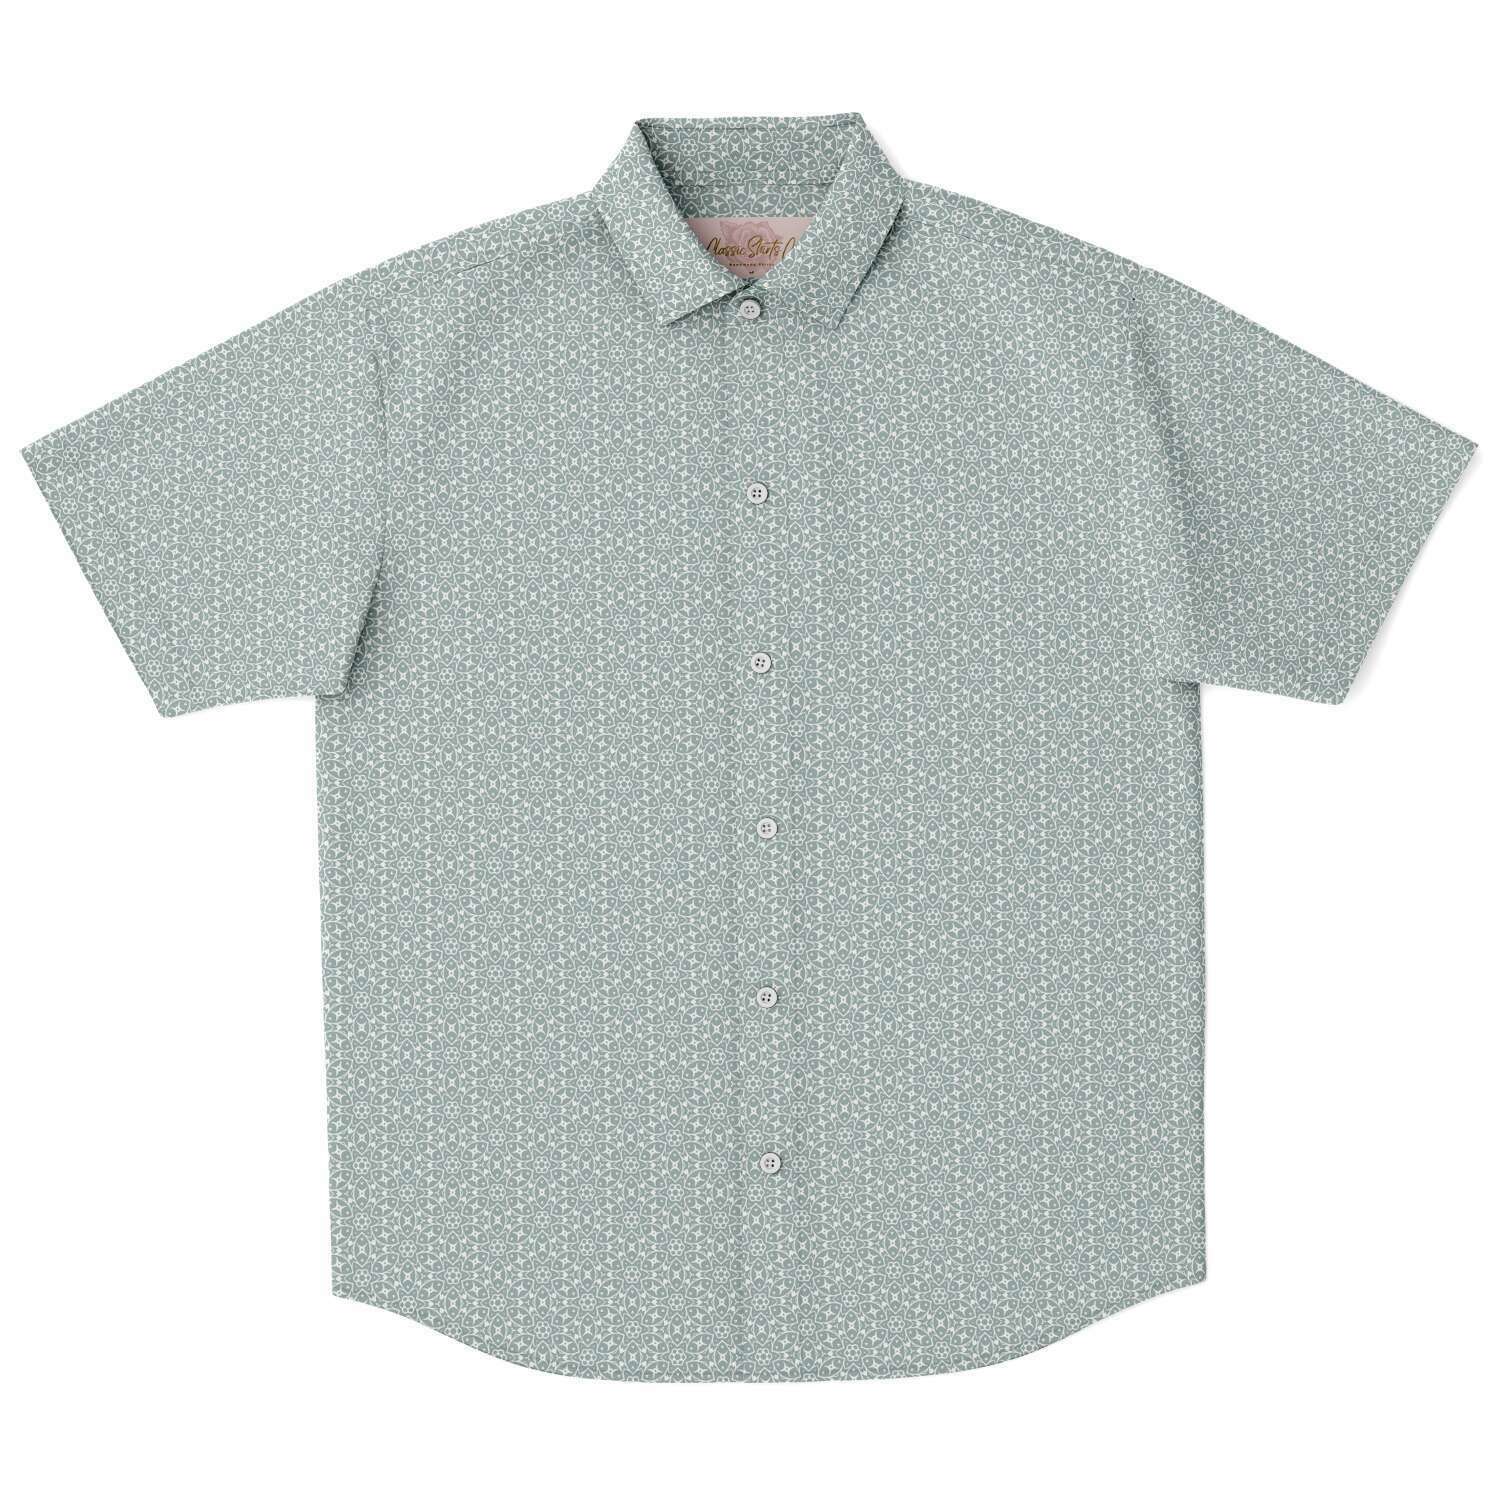 Sage Green Floral Geometric Print Men's Short Sleeve Button Down Shirt, S